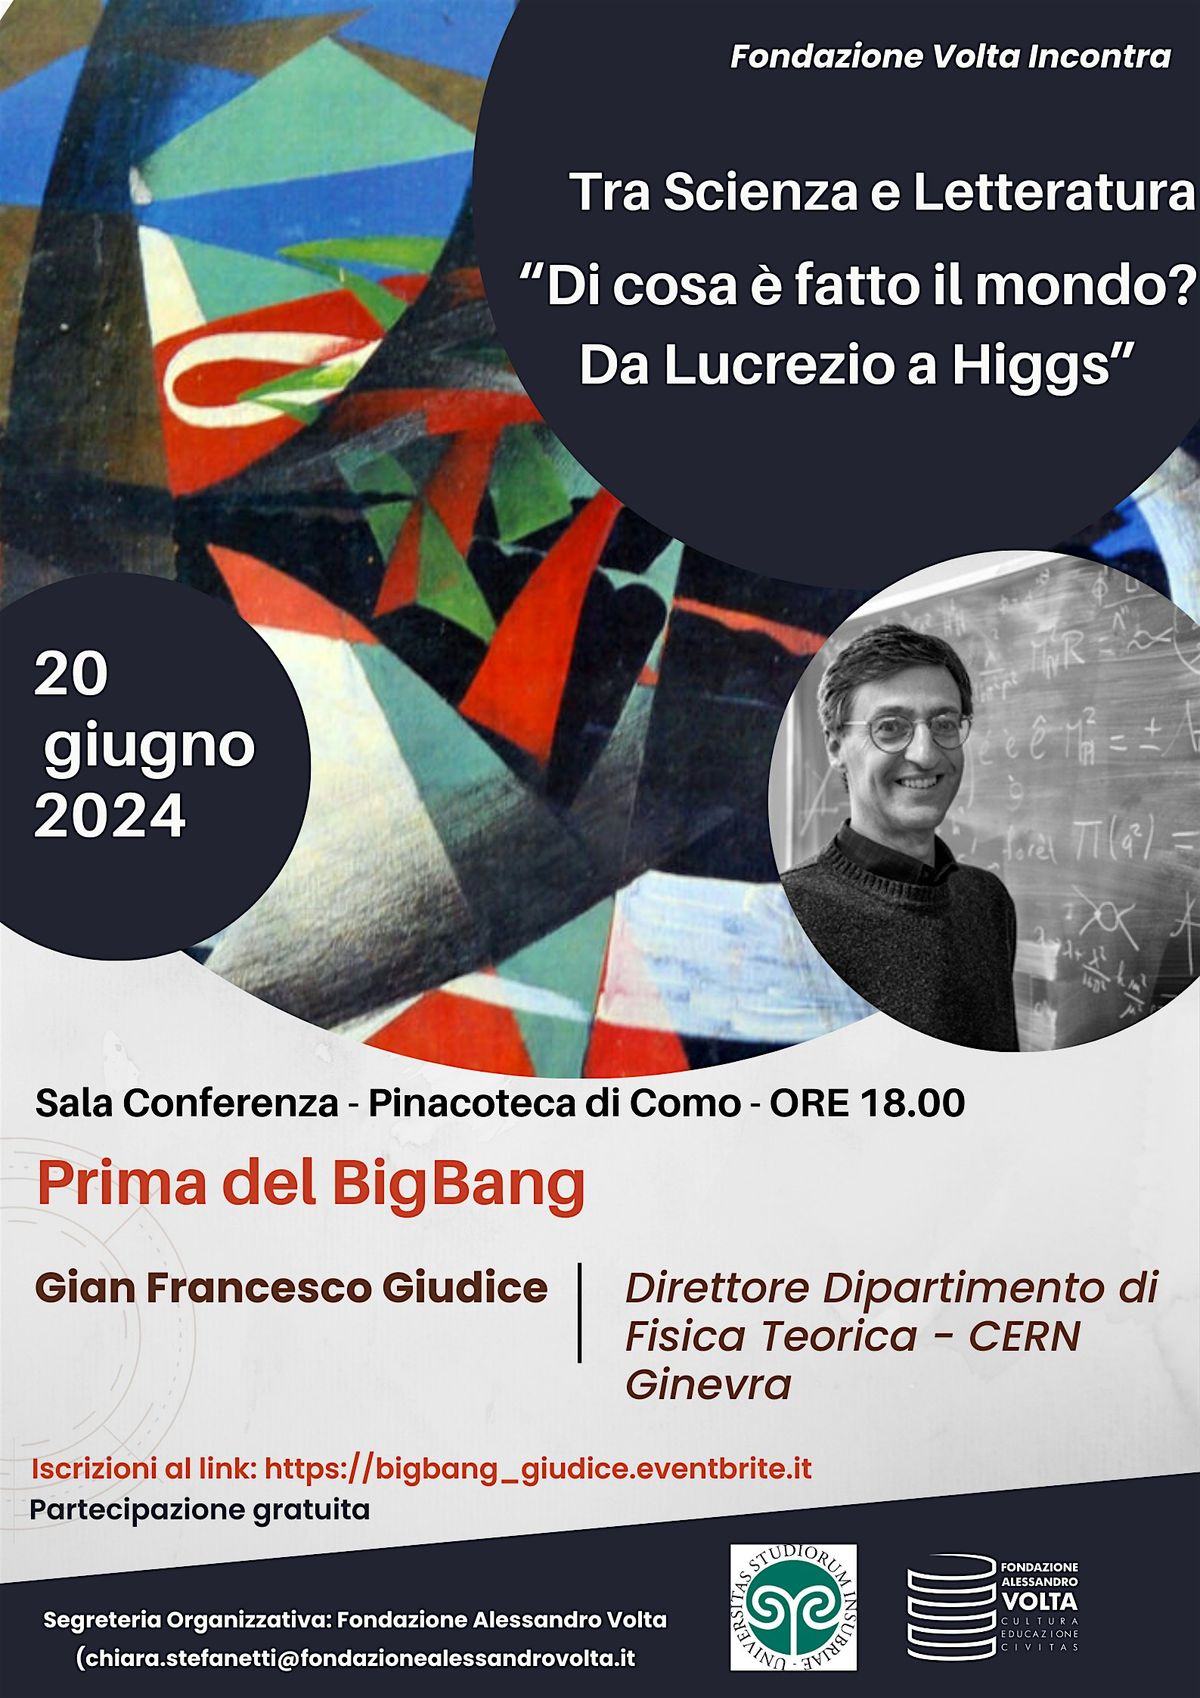 Prima del BigBang - Prof. Gian Francesco Giudice